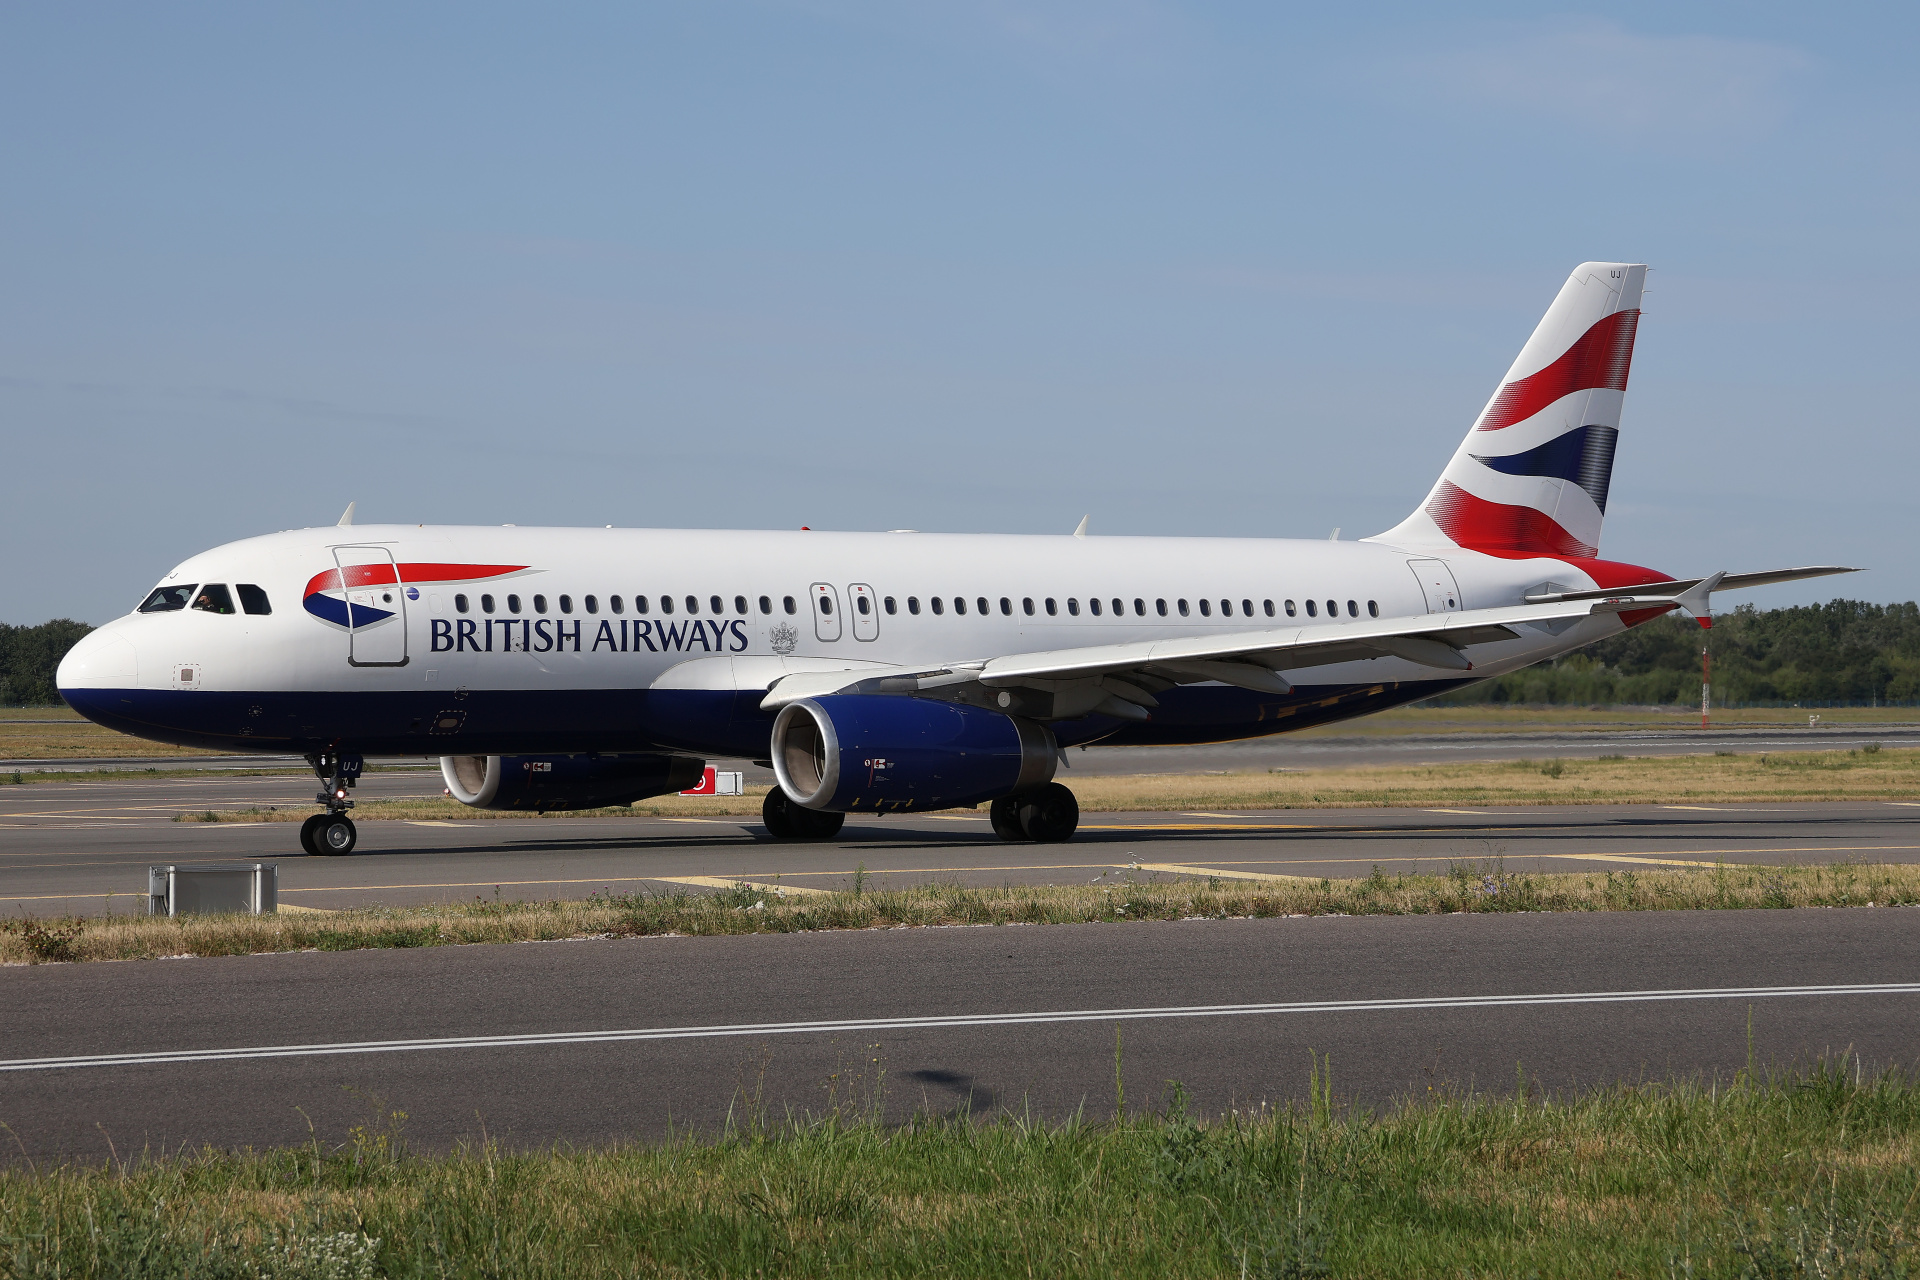 G-EUUJ (Aircraft » EPWA Spotting » Airbus A320-200 » British Airways)